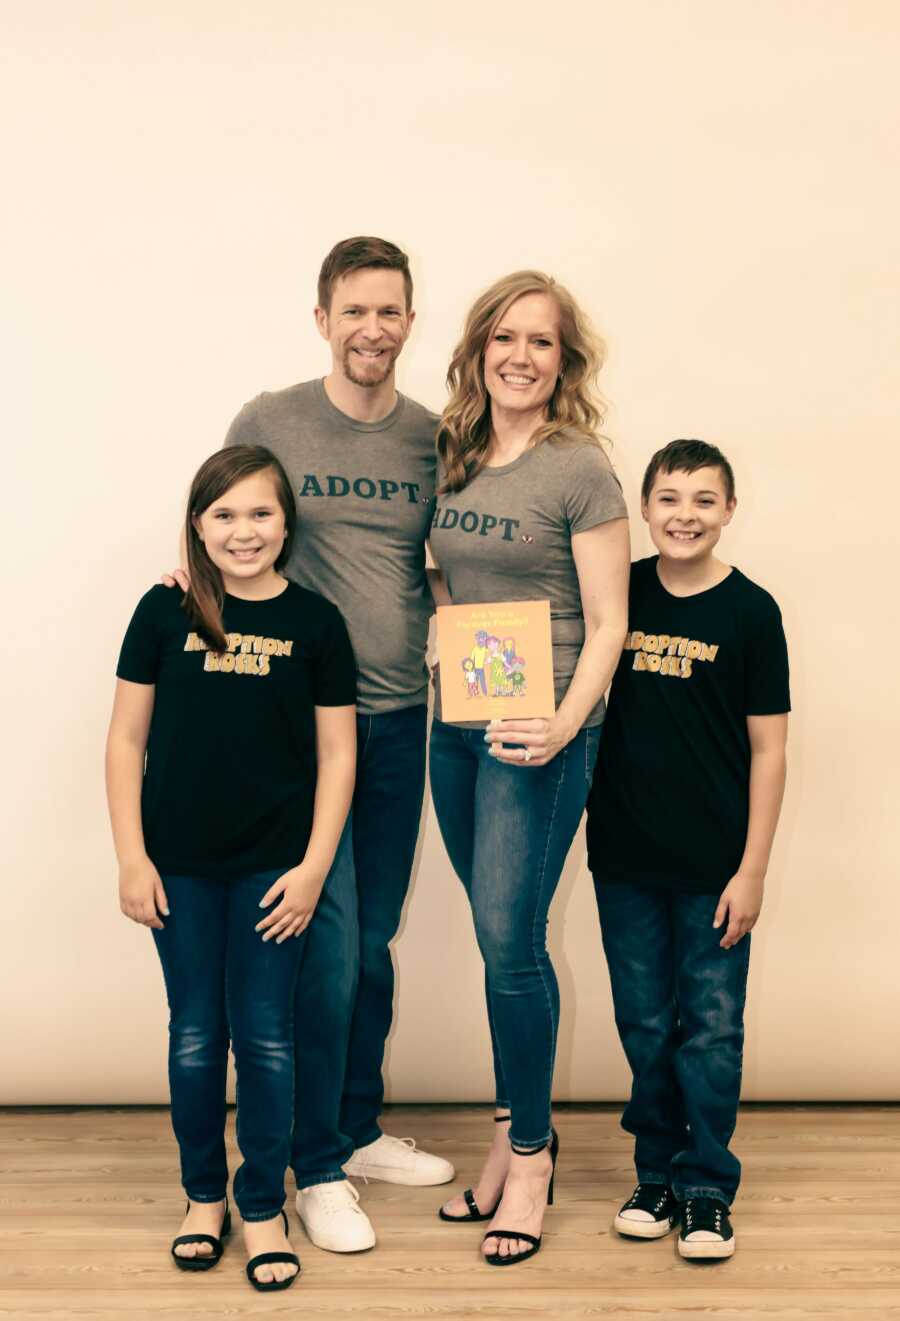 Adoptive family wearing matching adoption shirts